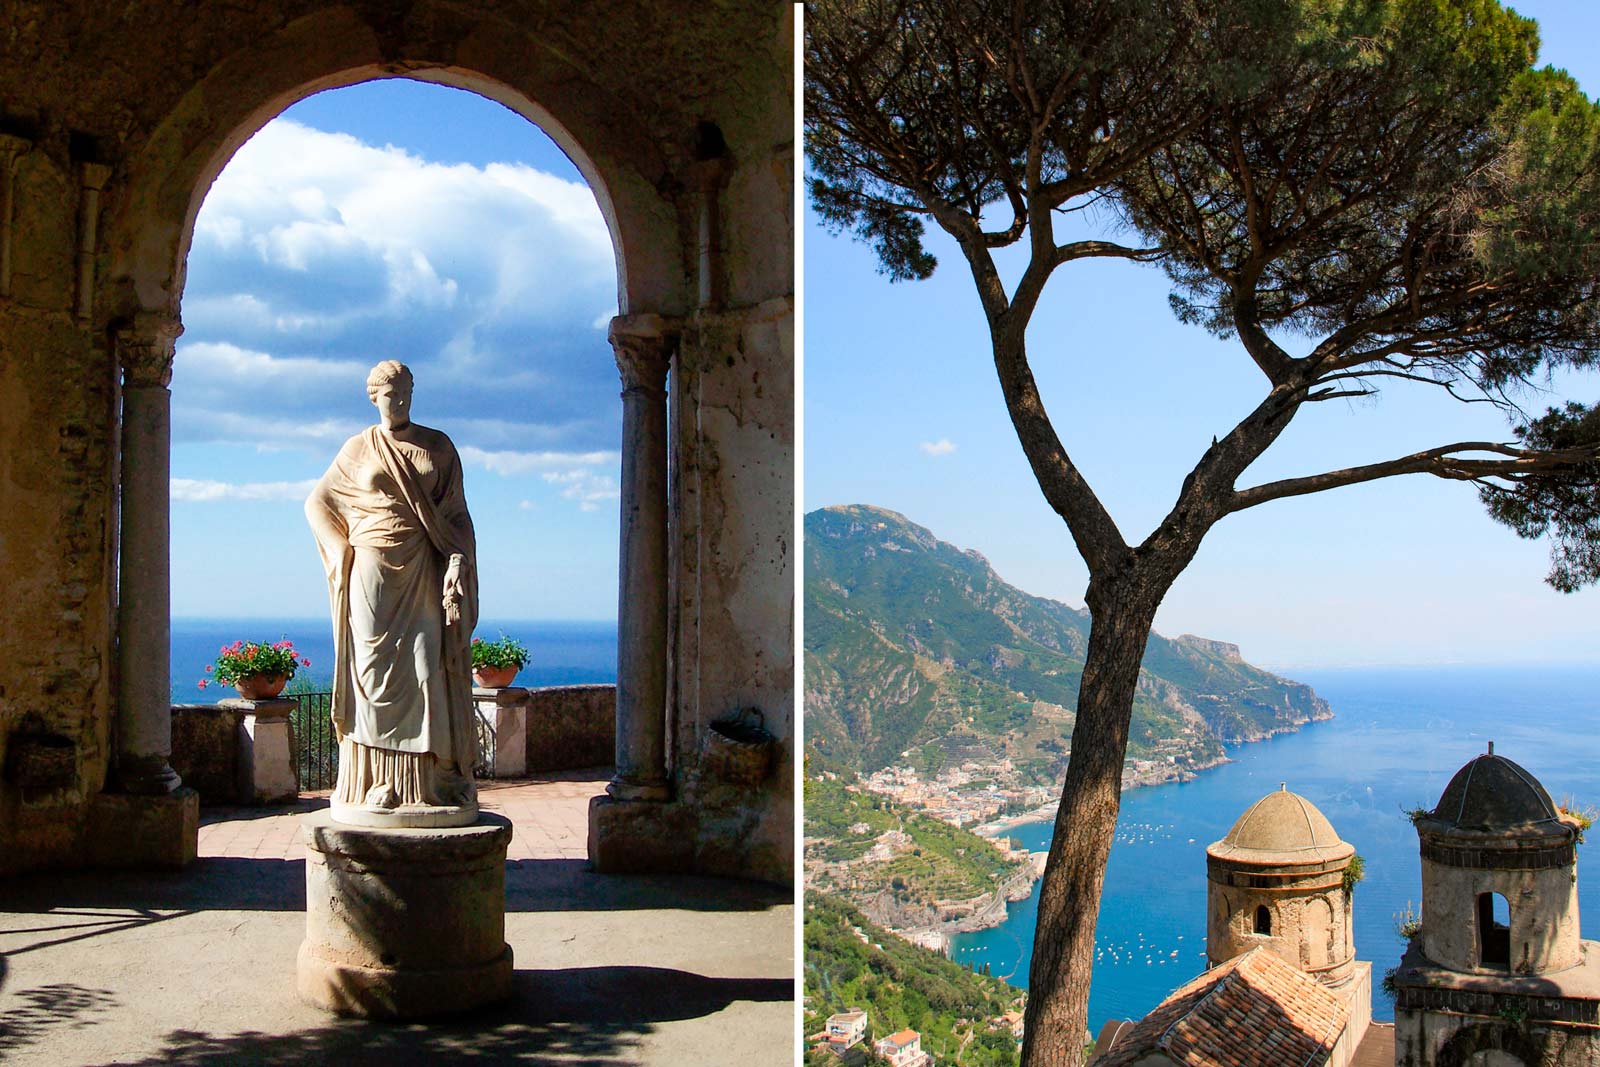 Villa Cimbrone and view of Amalfi Coast from Villa Rufolo